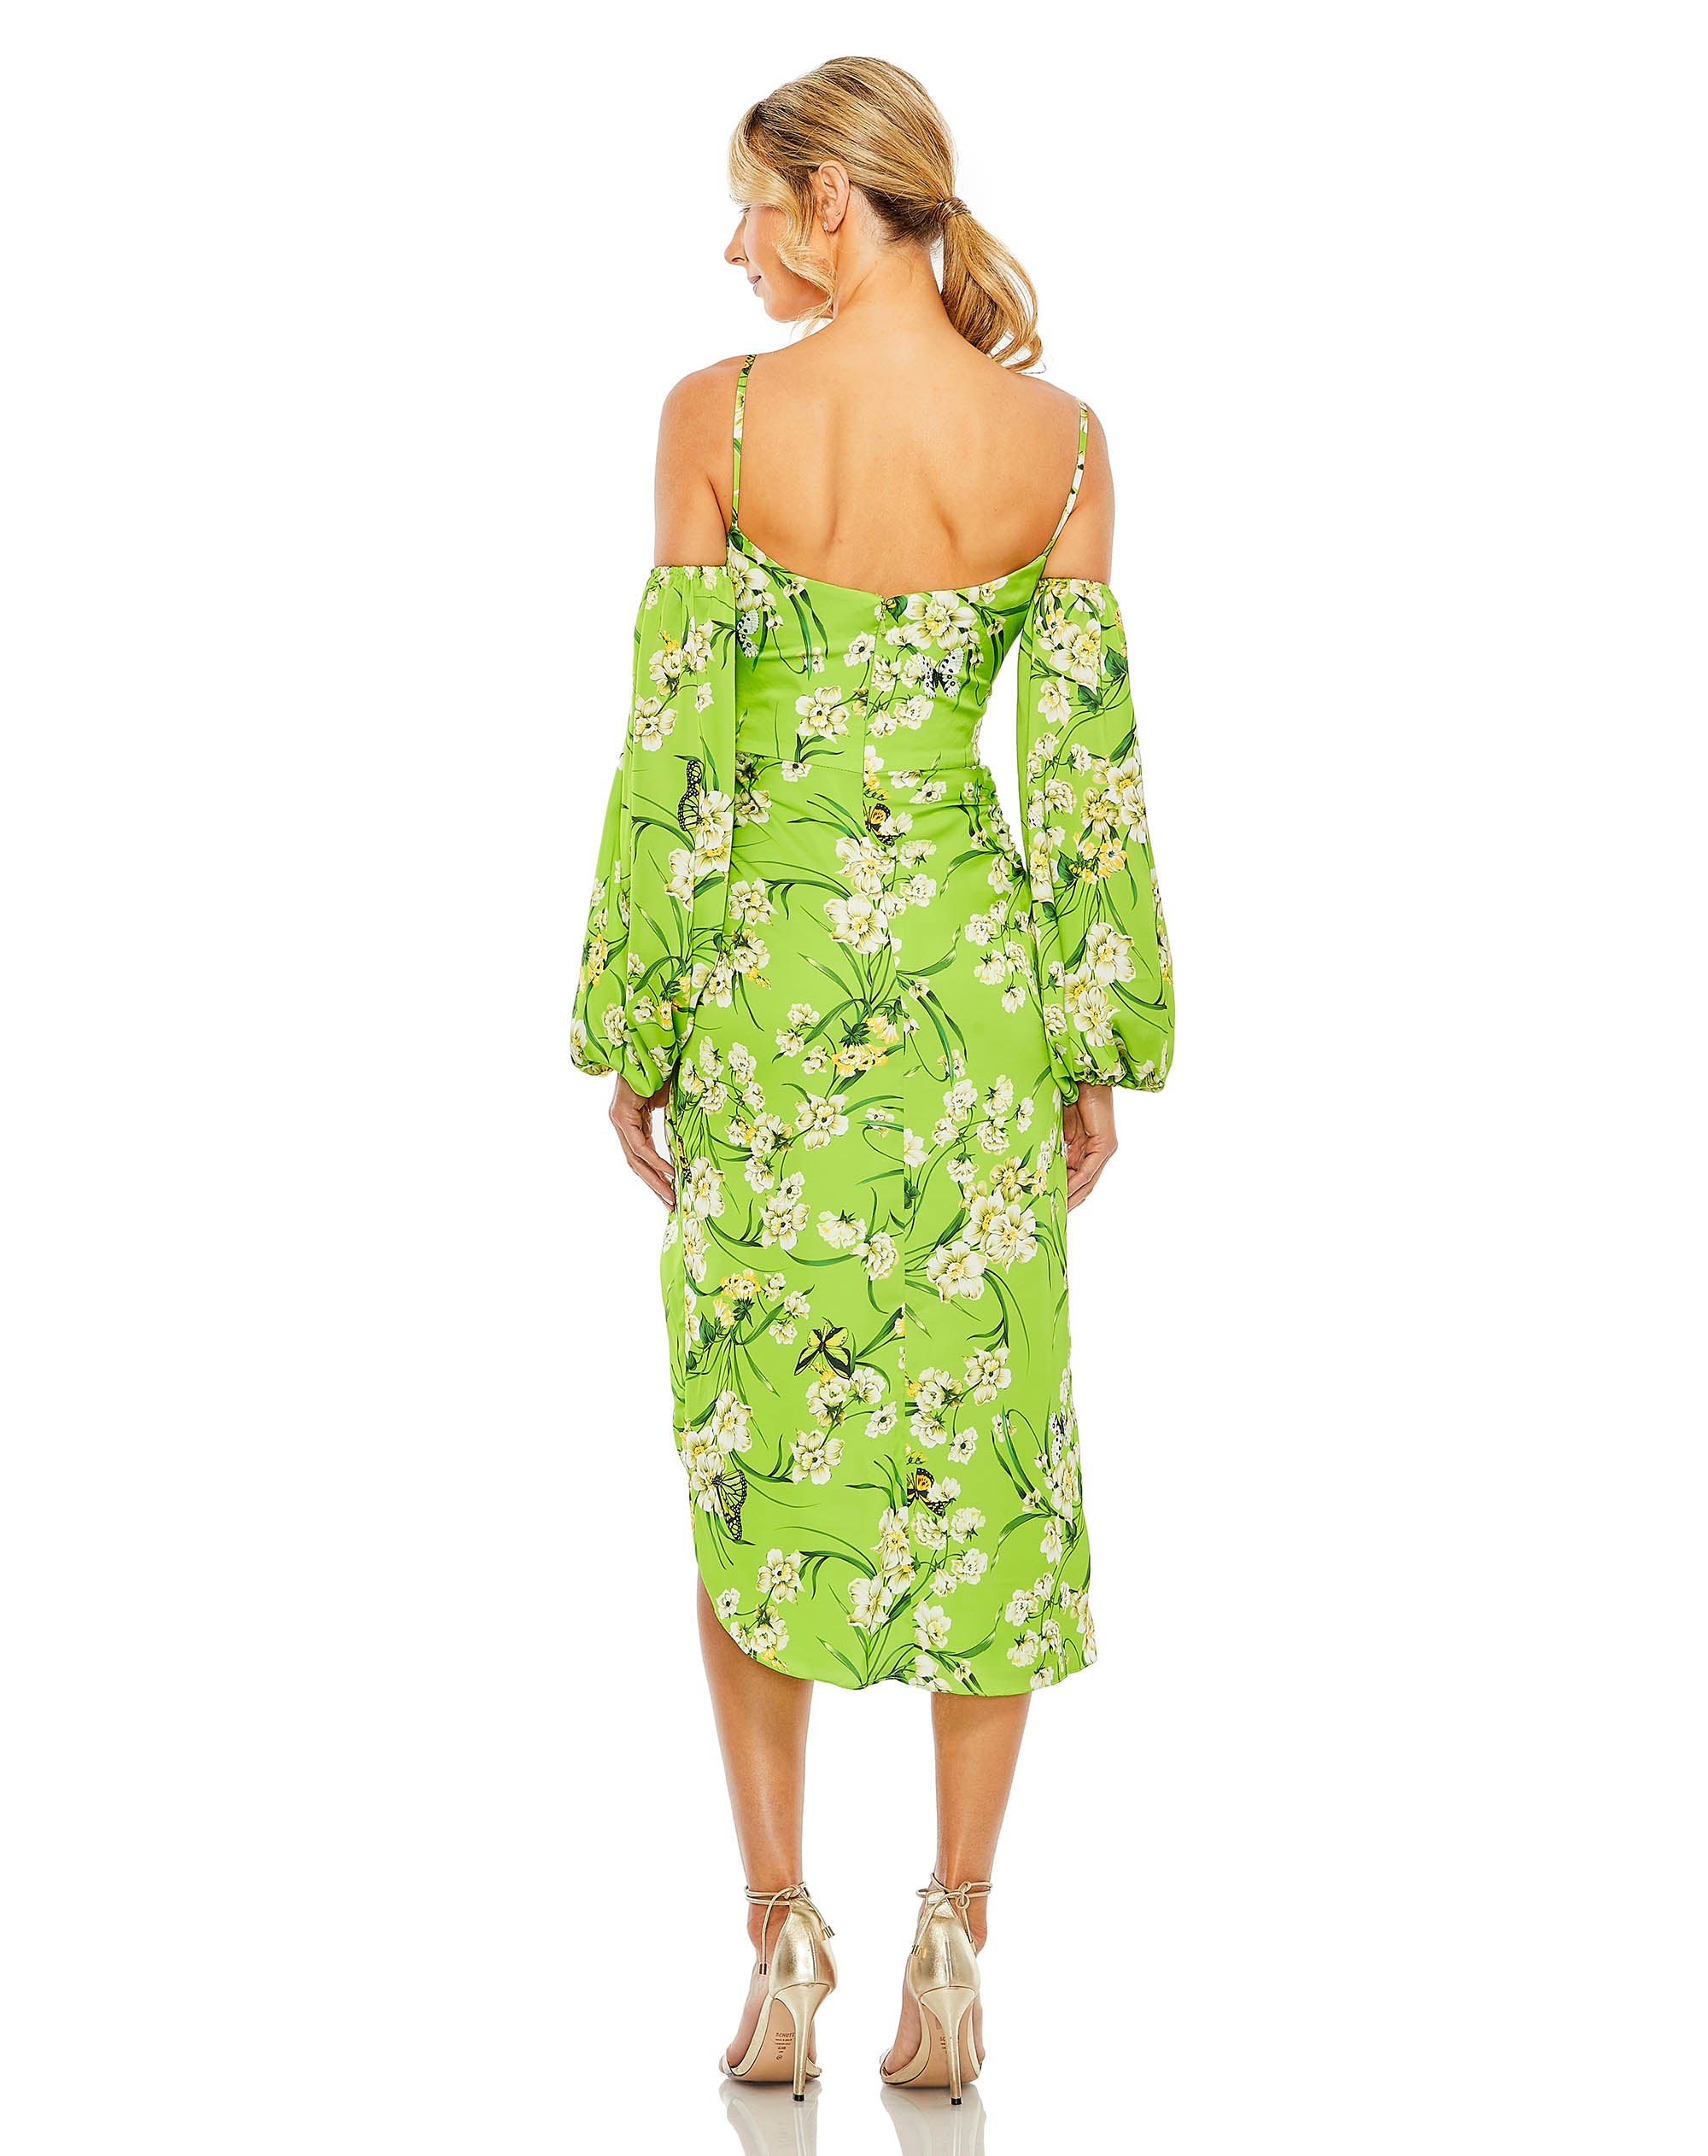 Off the shoulder floral print dress with keyhole | Sample | Sz. 2